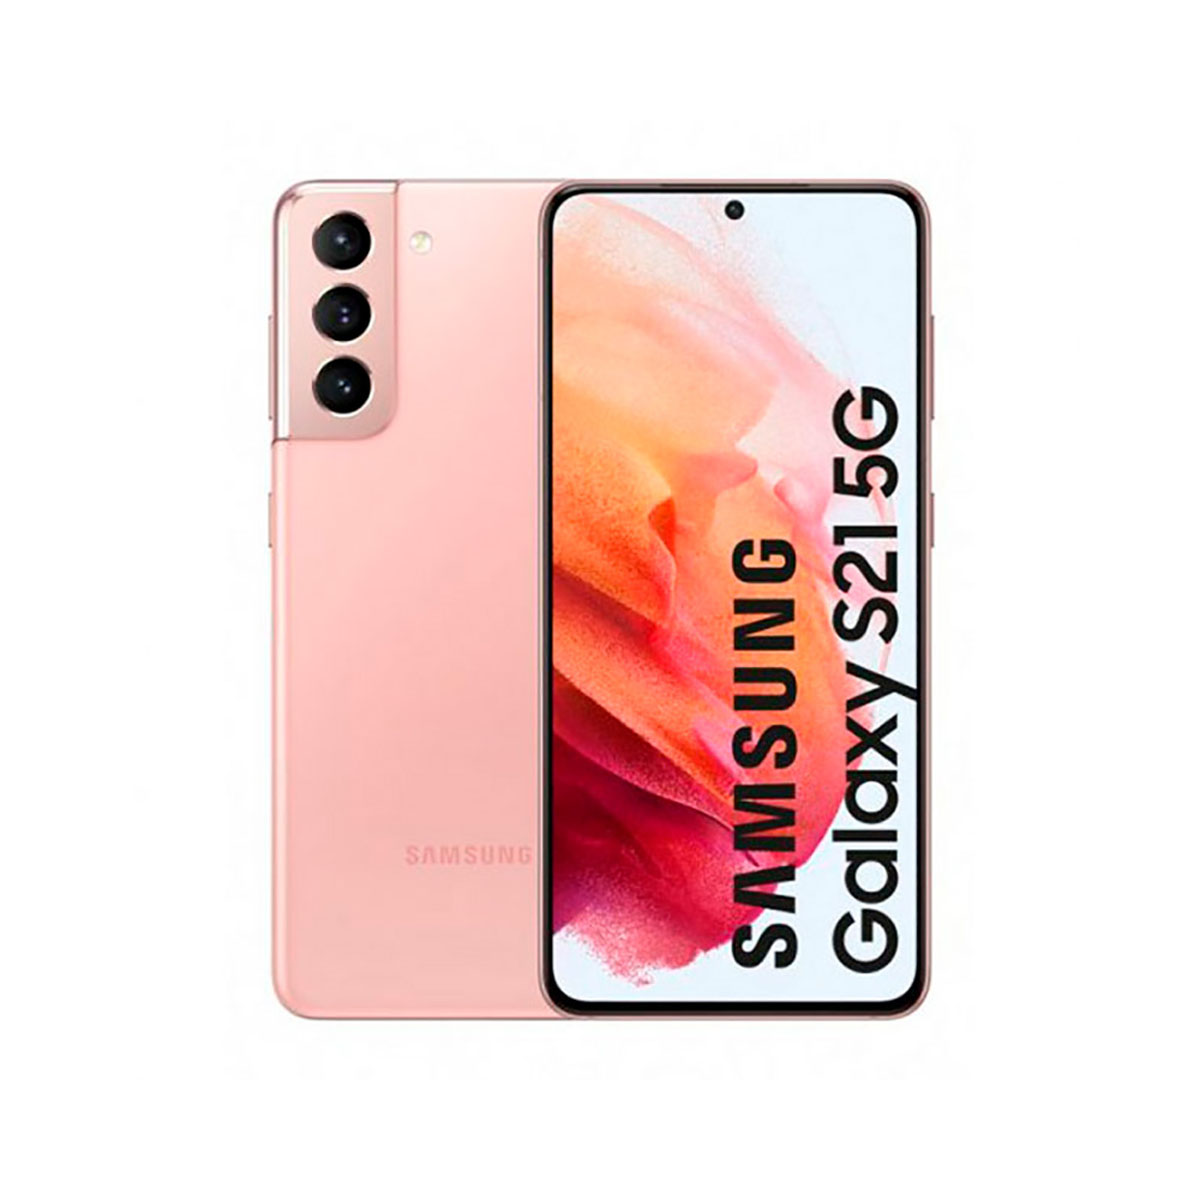 SAMSUNG GALAXY S21 5G 8GB/128GB ROSA (PHANTOM PINK) DUAL SIM G991 - SEMINUEVO